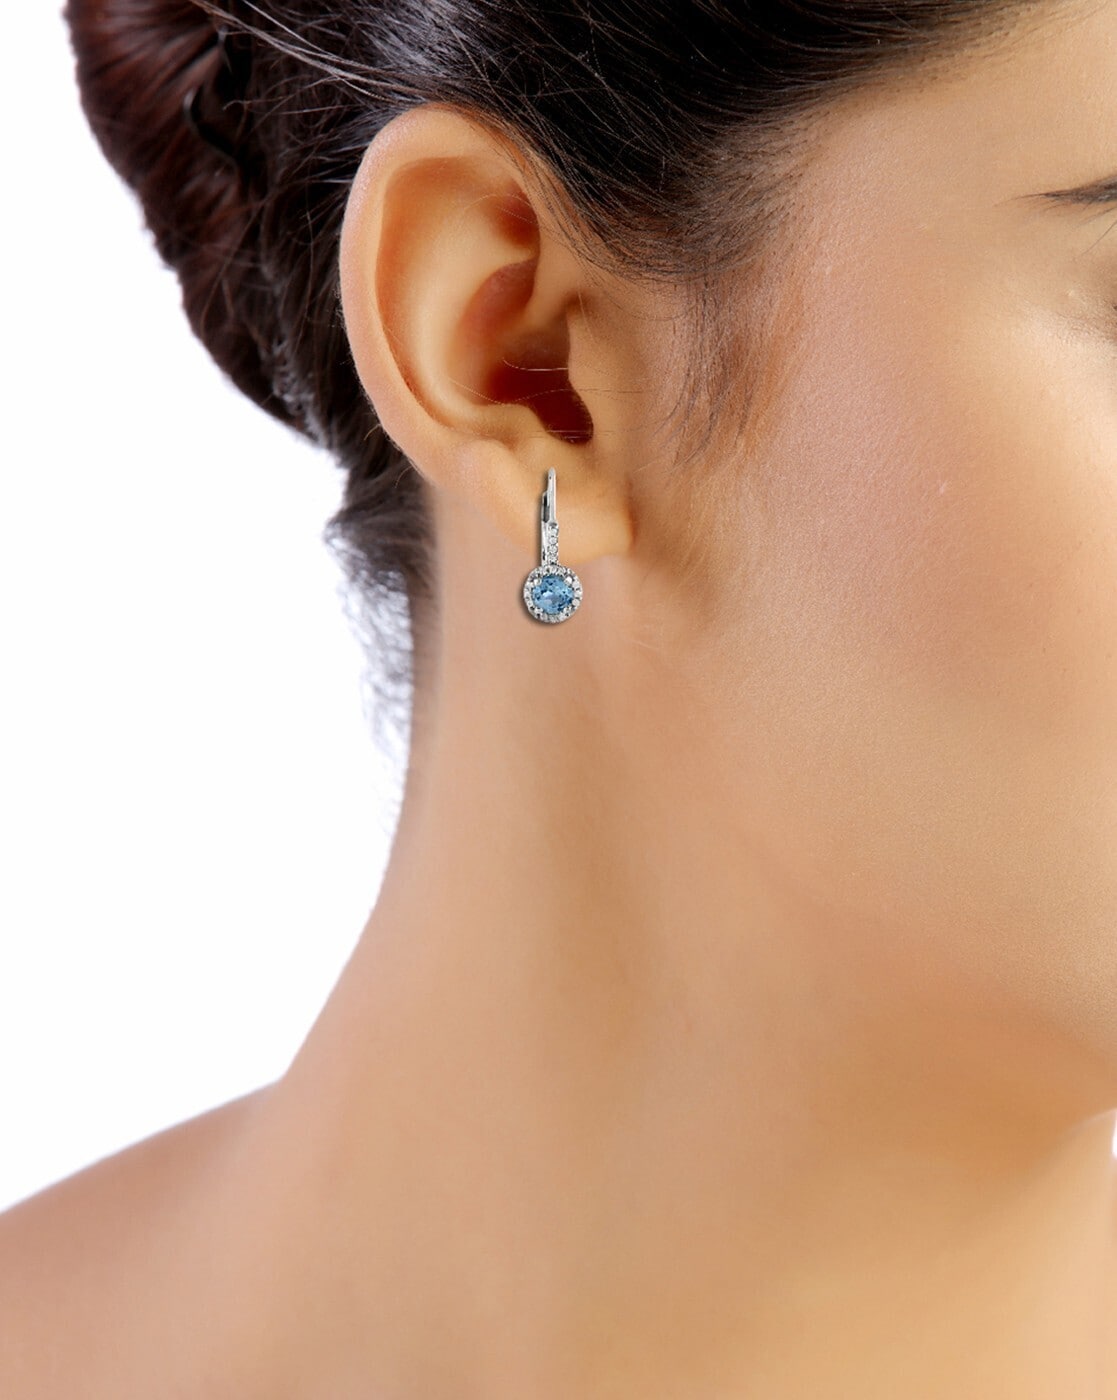 Buy Aquamarine Earrings Online In India  Etsy India